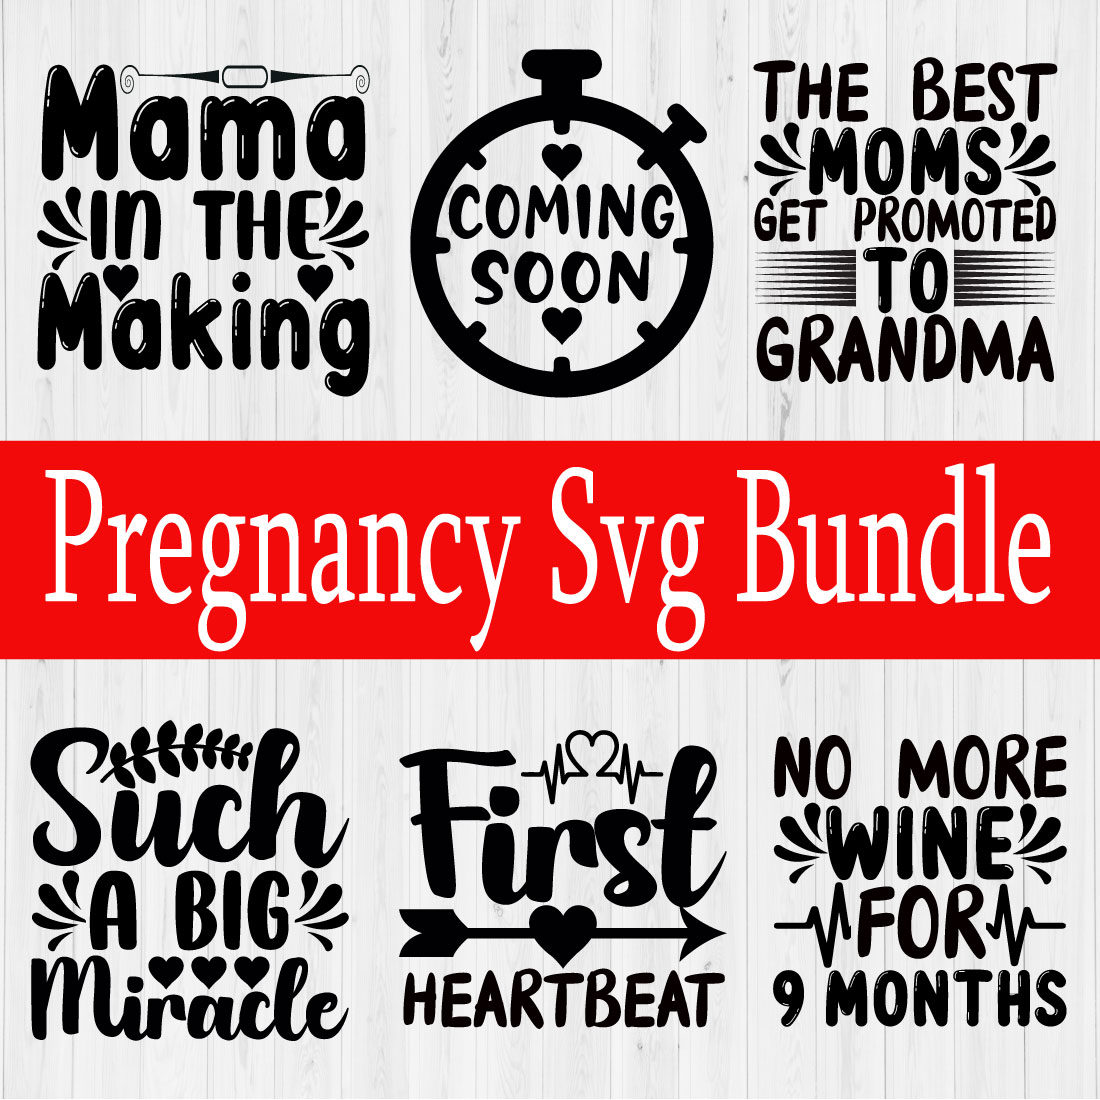 Pregnancy Svg Bundle Vol1 preview image.